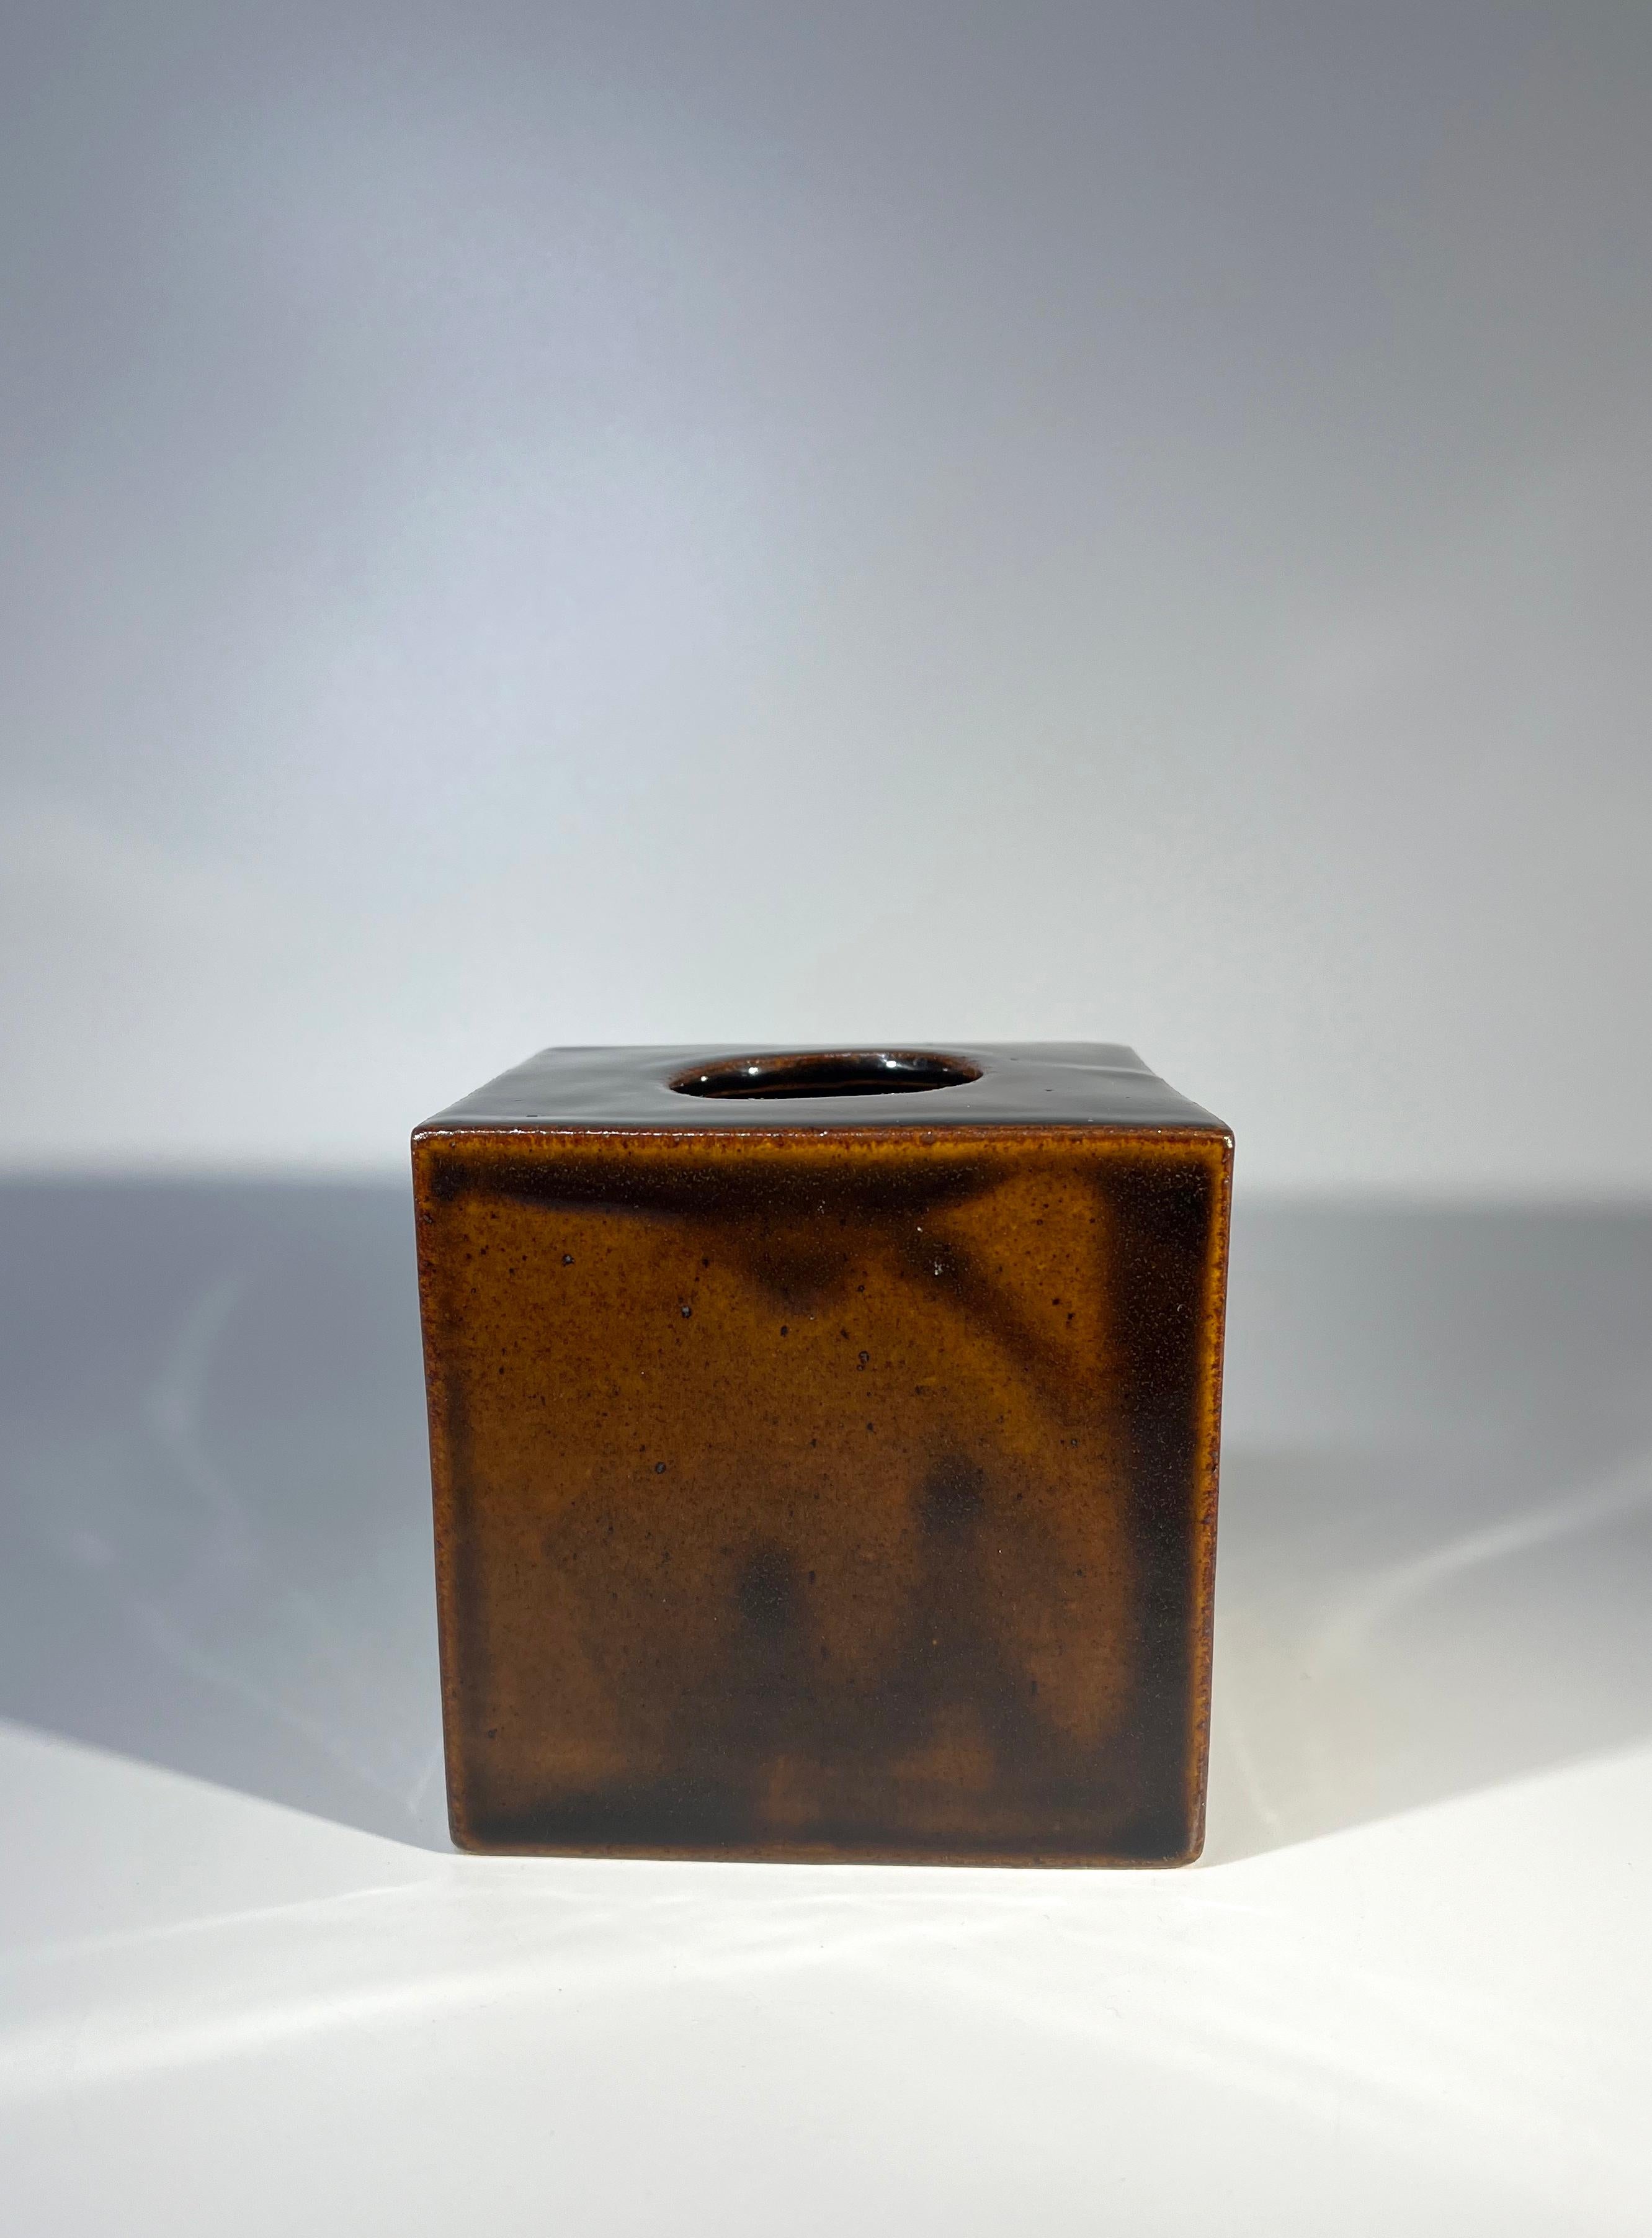 Rich caramel glazed cube vase by Christine Konschak for Knabstrup, Denmark
Simplistic and effective Danish design
Circa 1960-65
Signed CK Knabstrup and original paper label to base
Height 3.5 inch, Width 3.5 inch, Depth 3.5 inch
Excellent condition